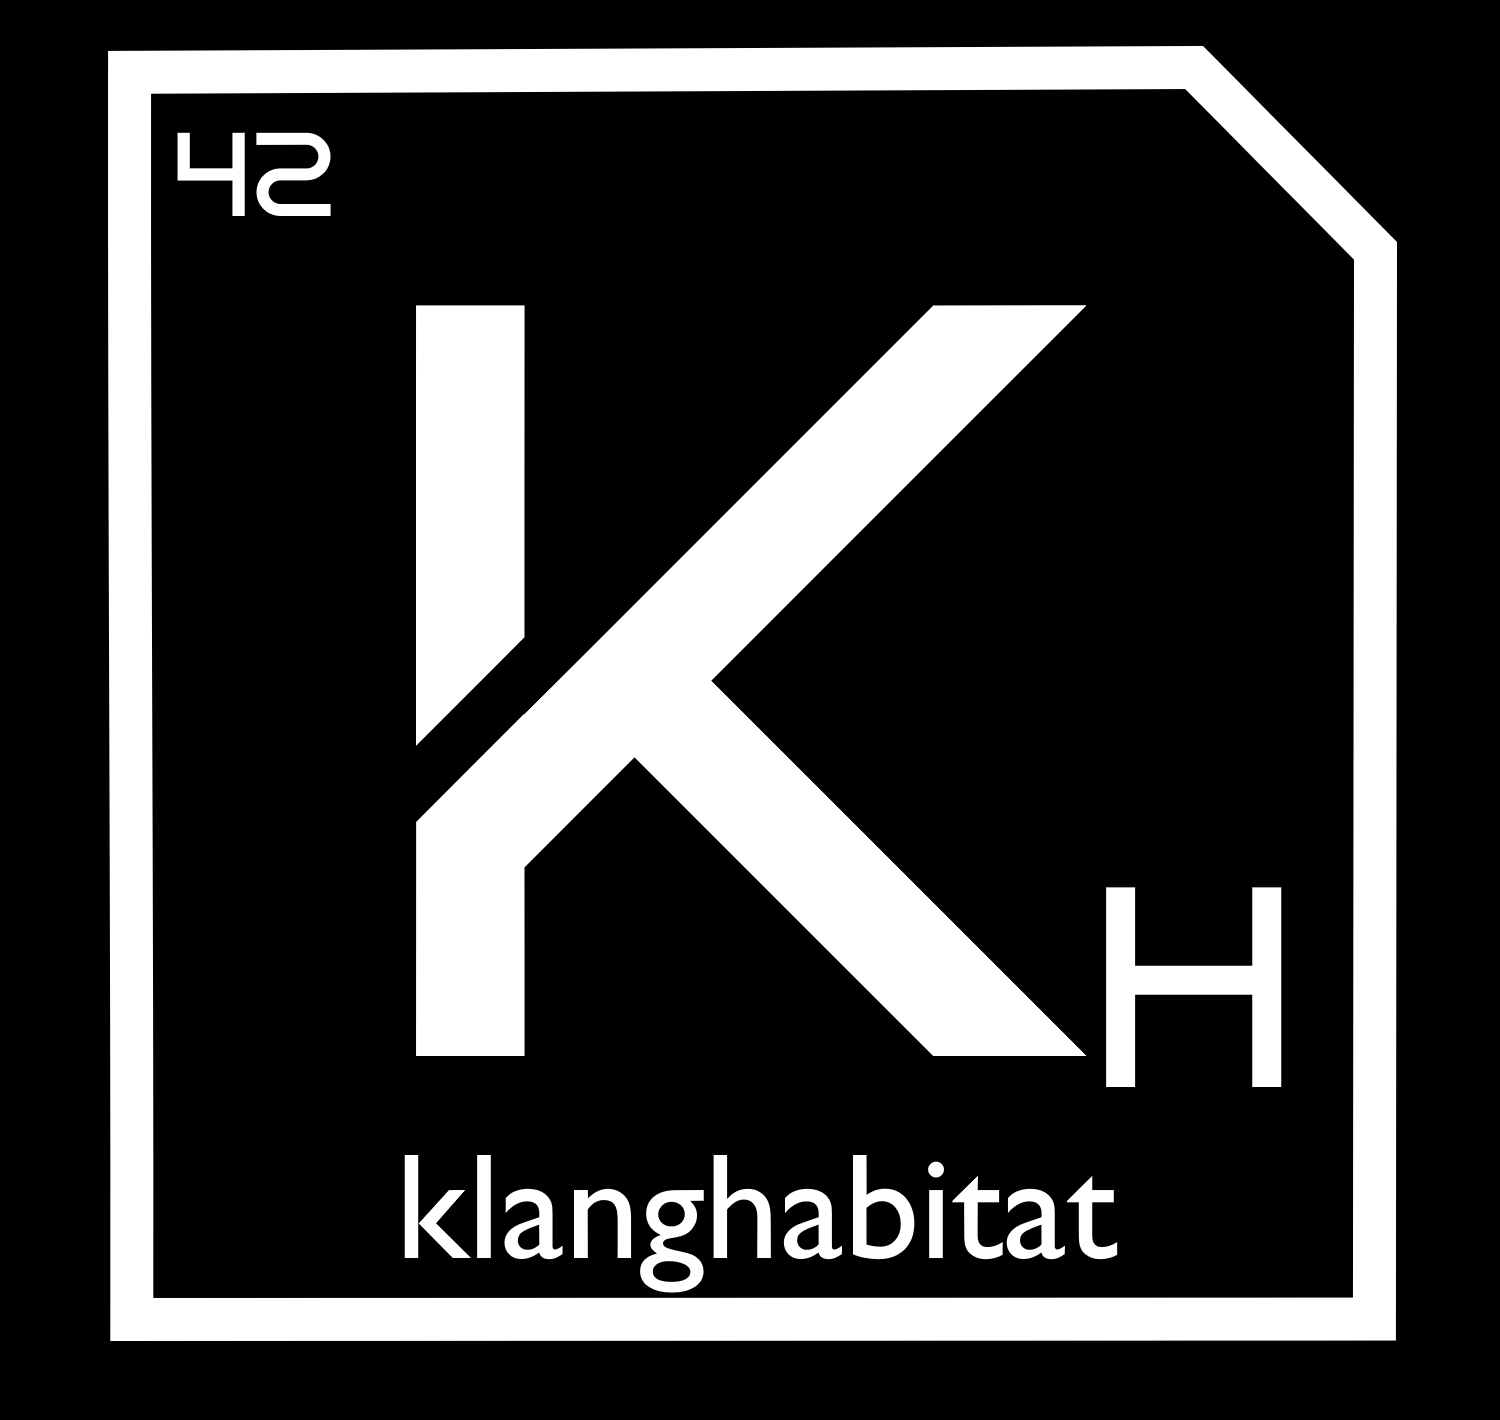 www.klanghabitat.com